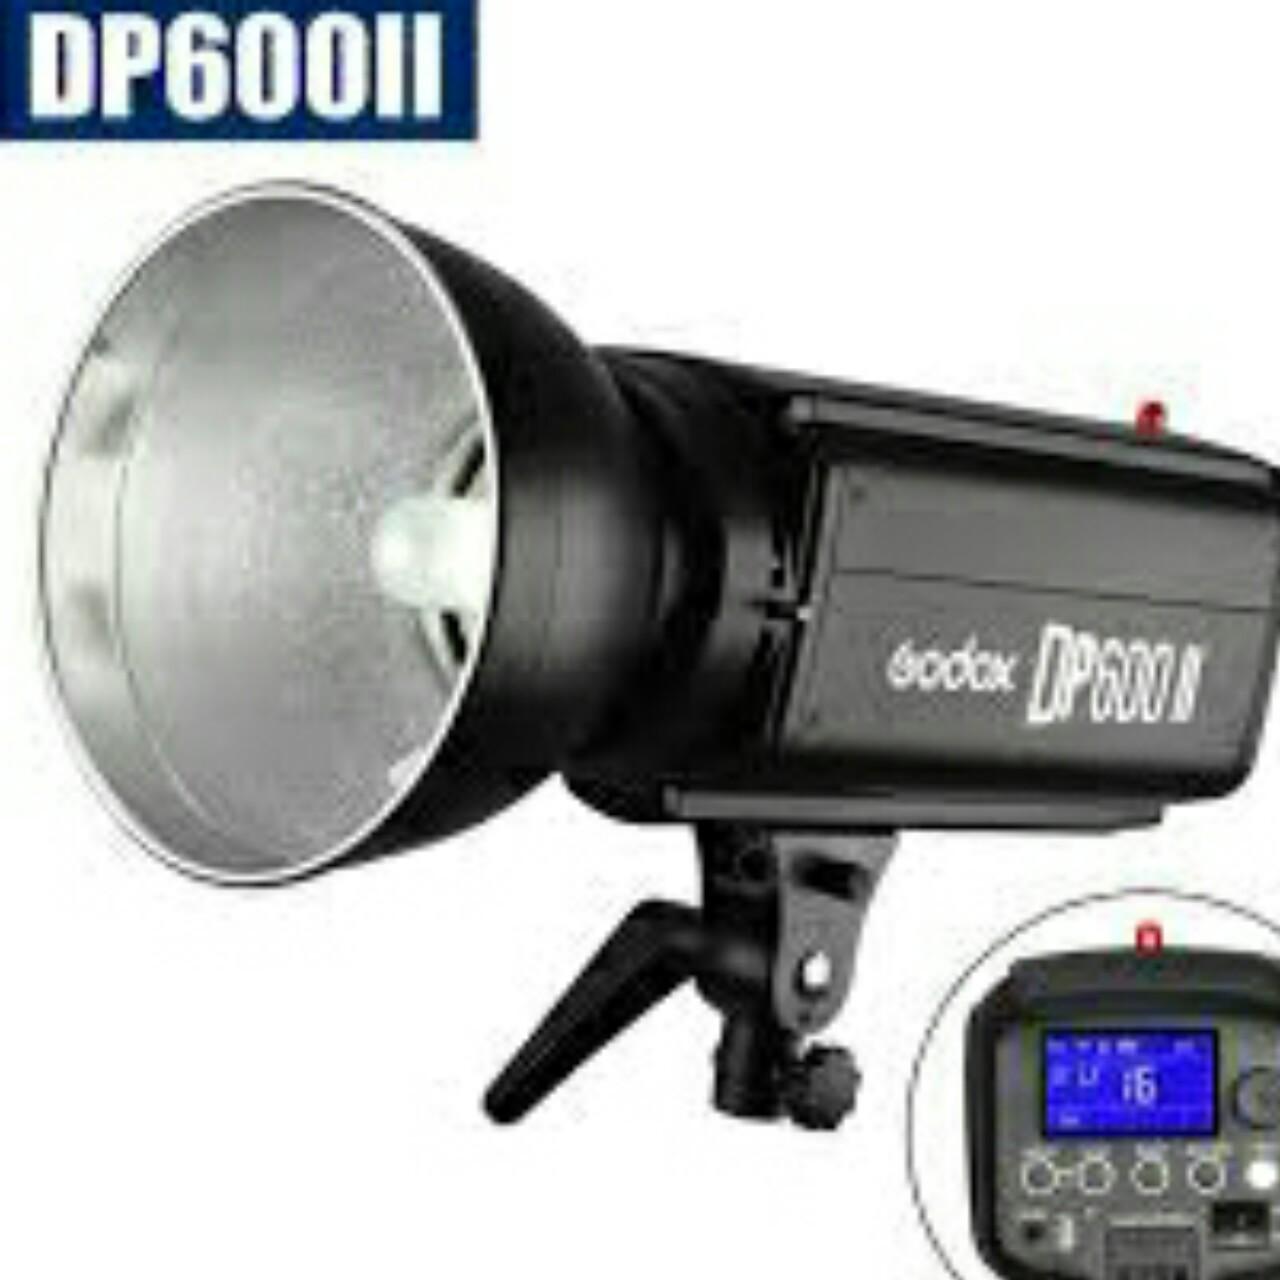 Đèn flash studio Godox DP600II